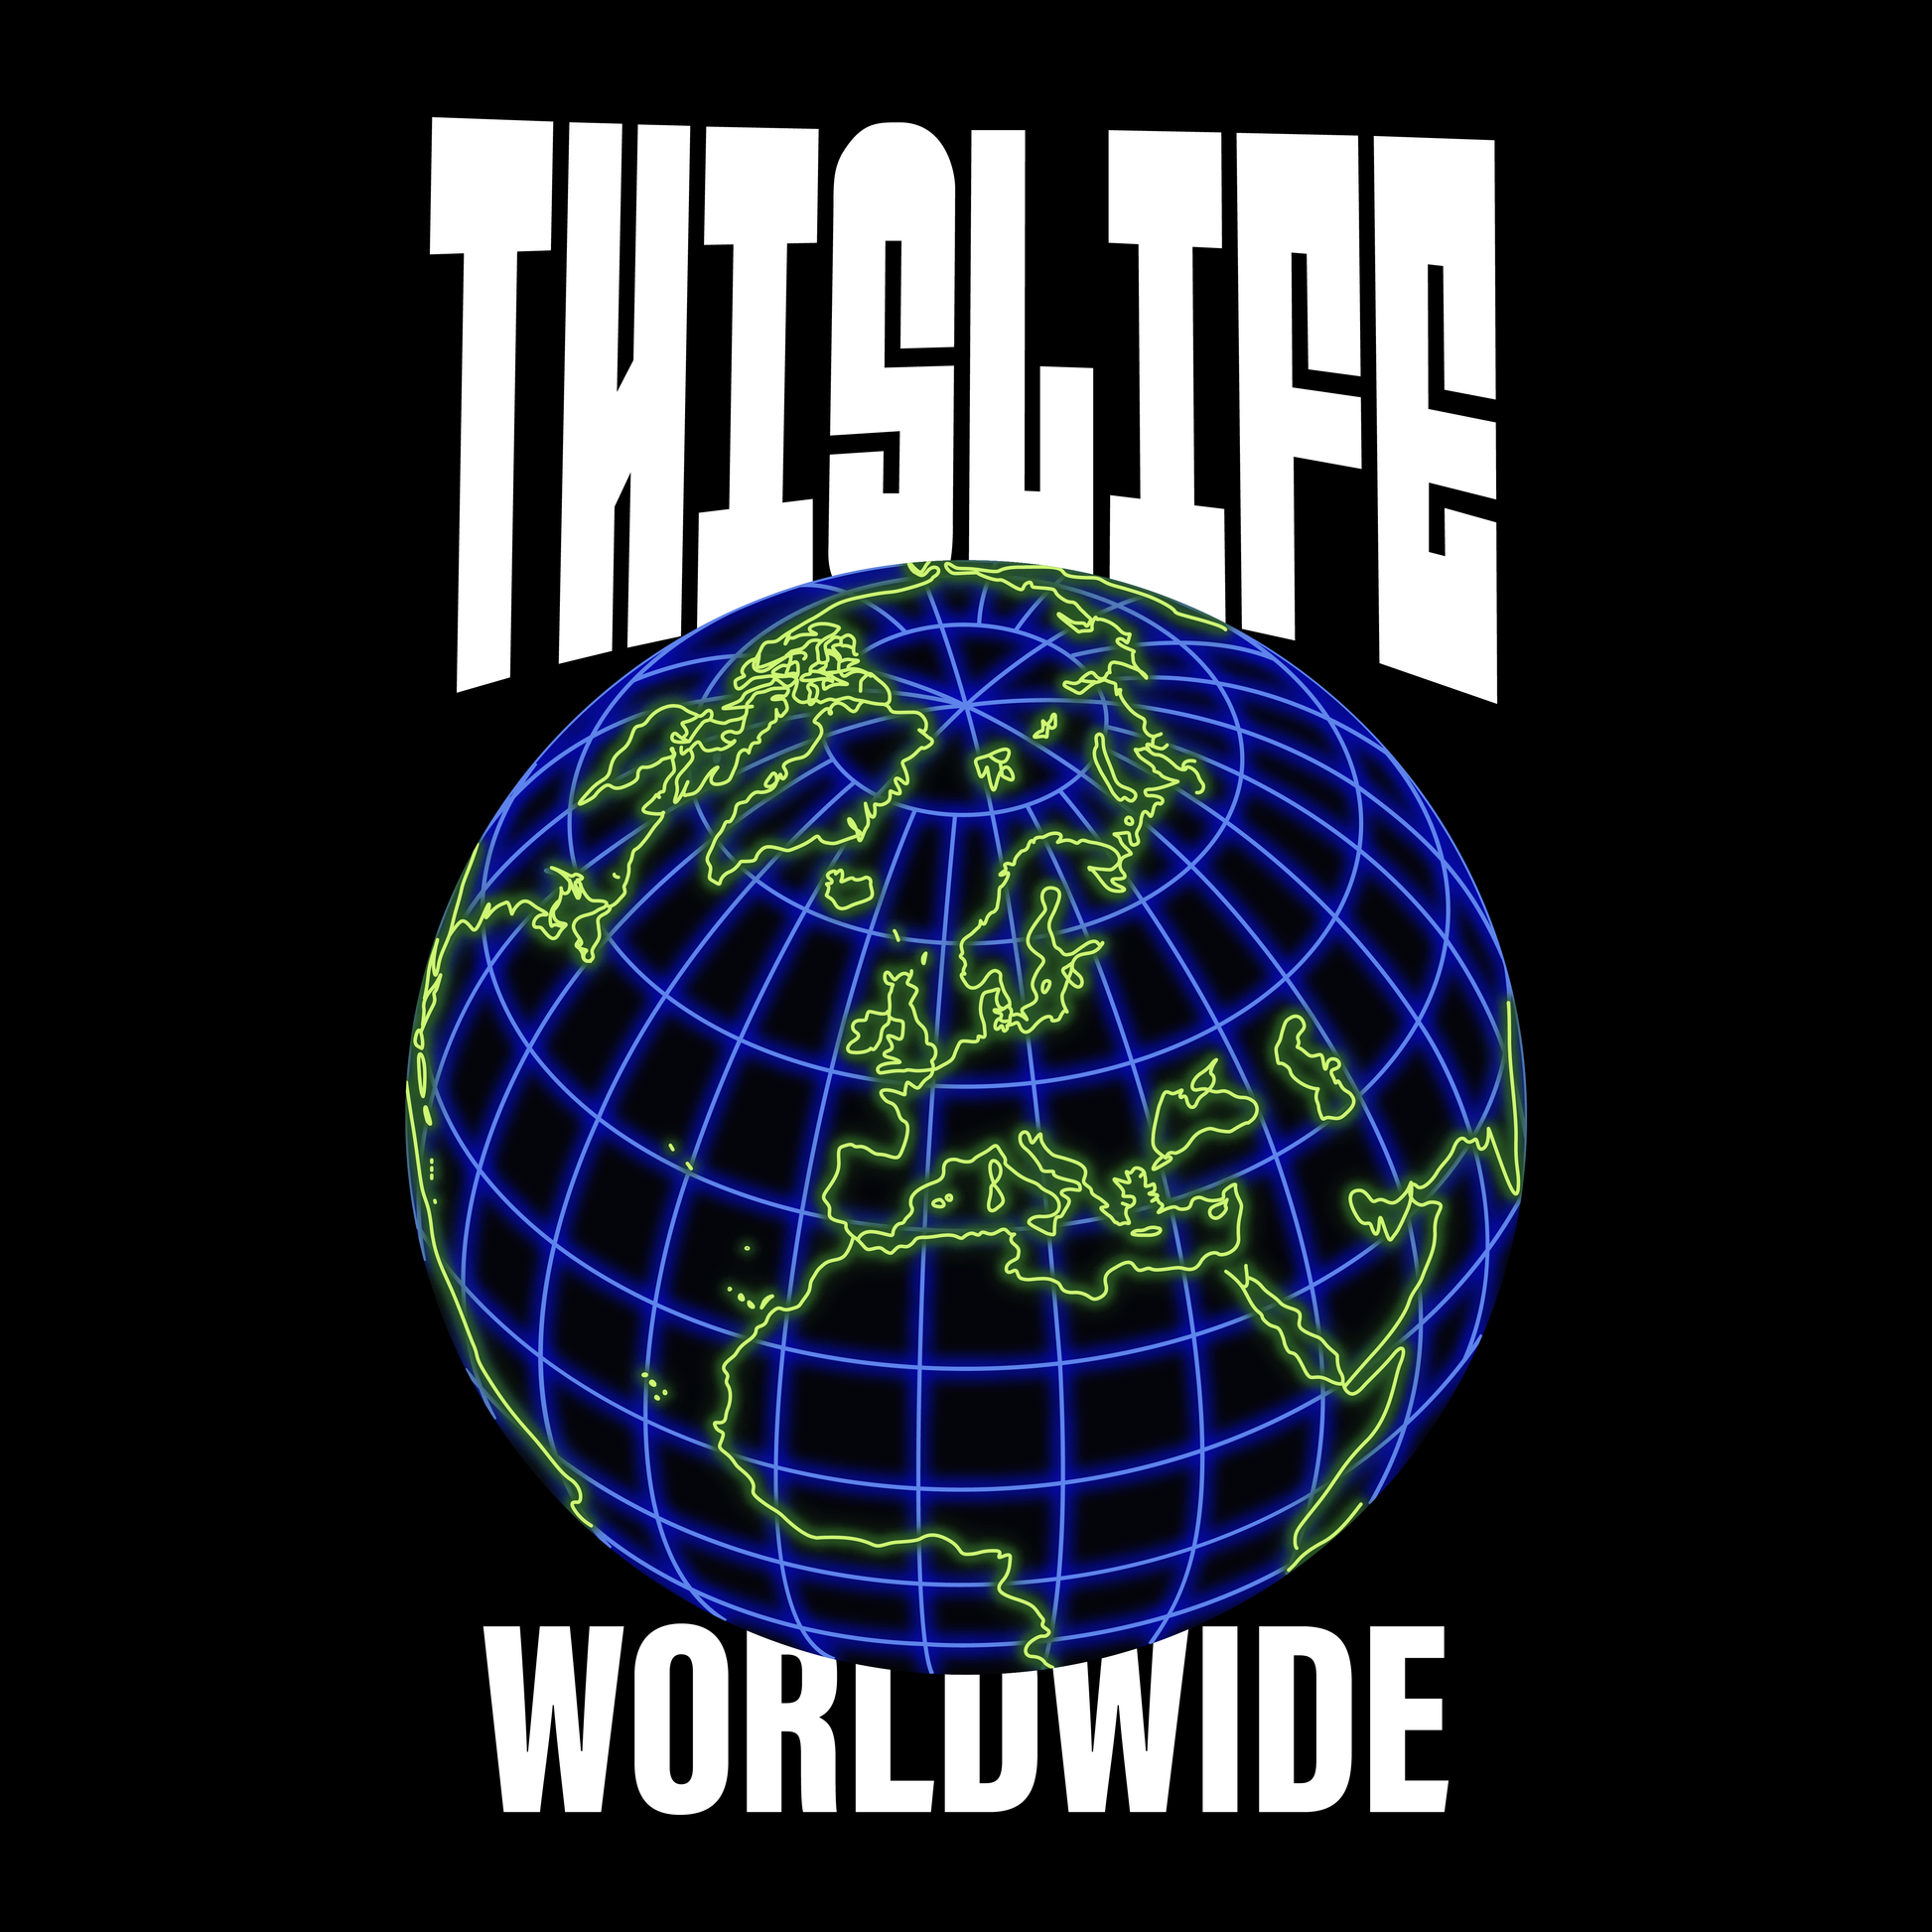 THisLIFE Worldwide design